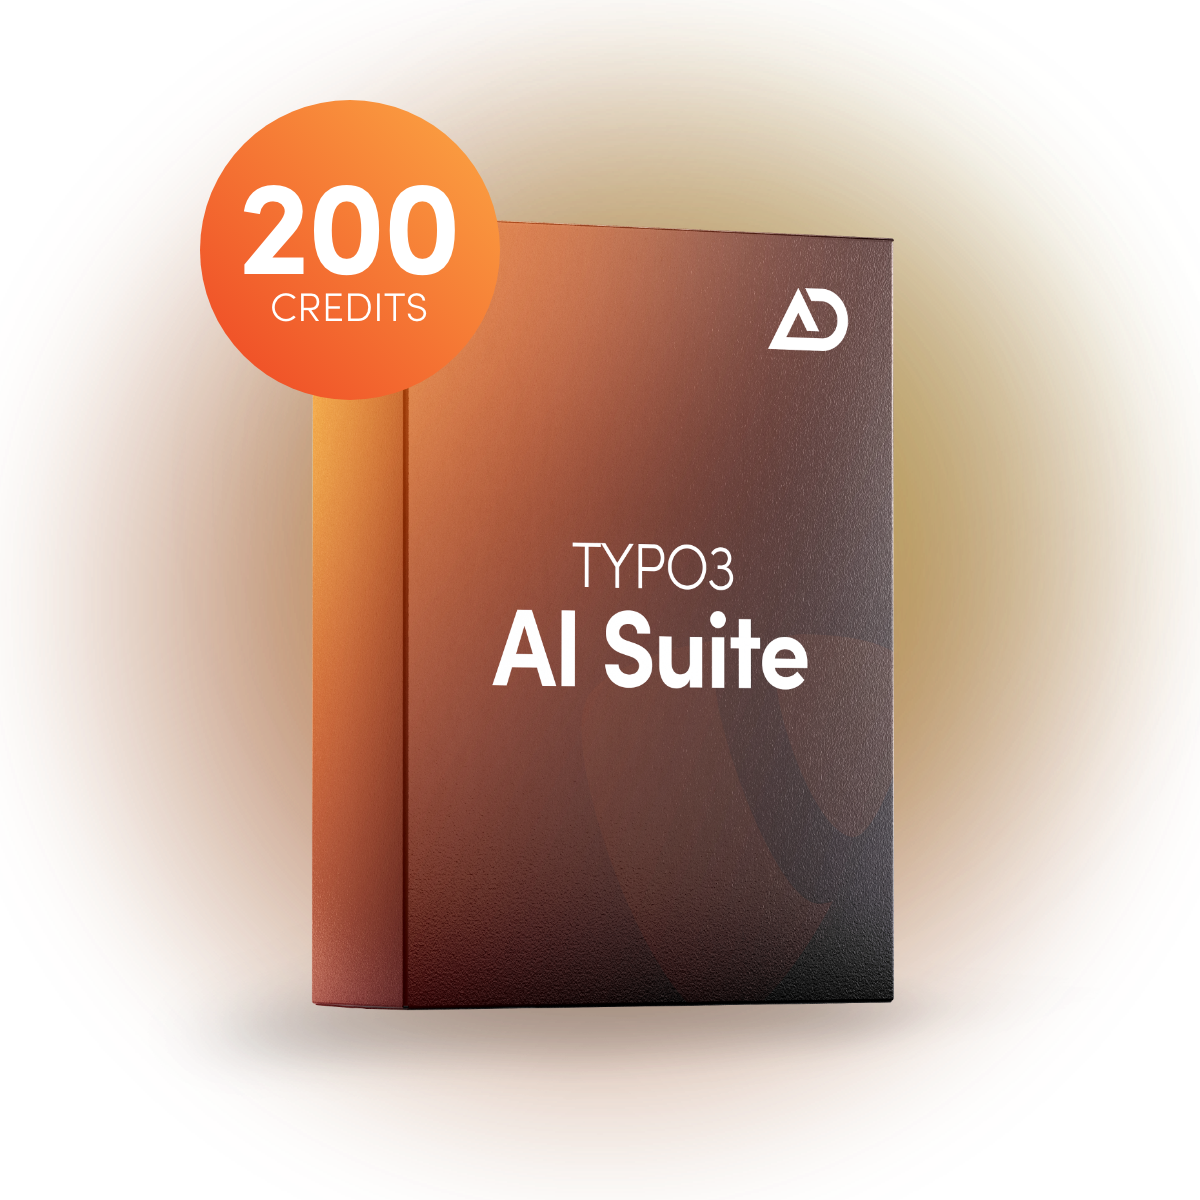 TYPO3 AI-Suite 200 Credits